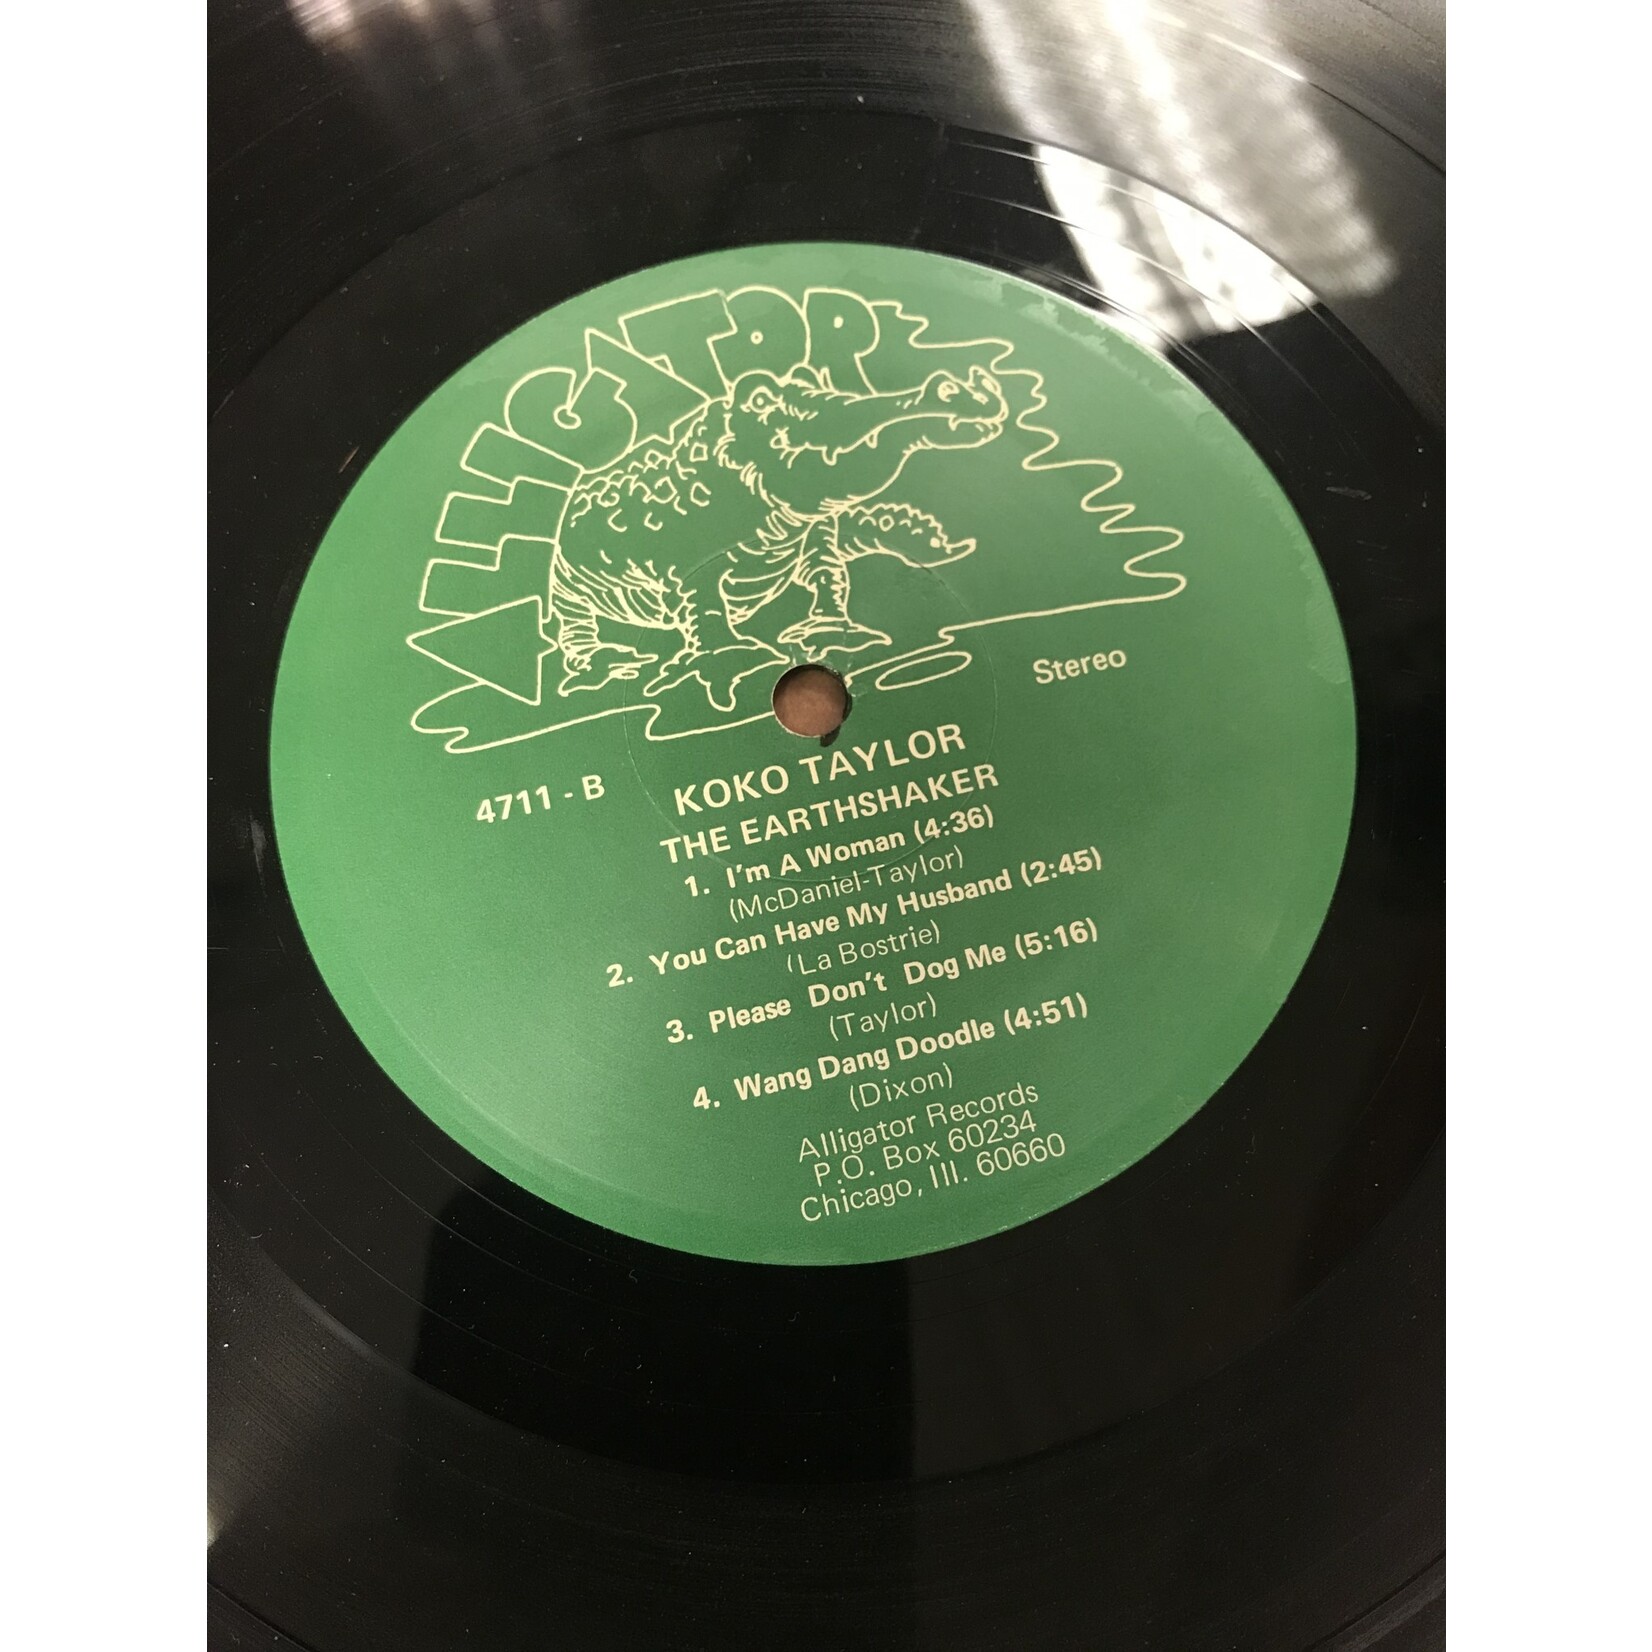 Koko Taylor - The Earthshaker - AL 4711 - Vinyl LP (USED)